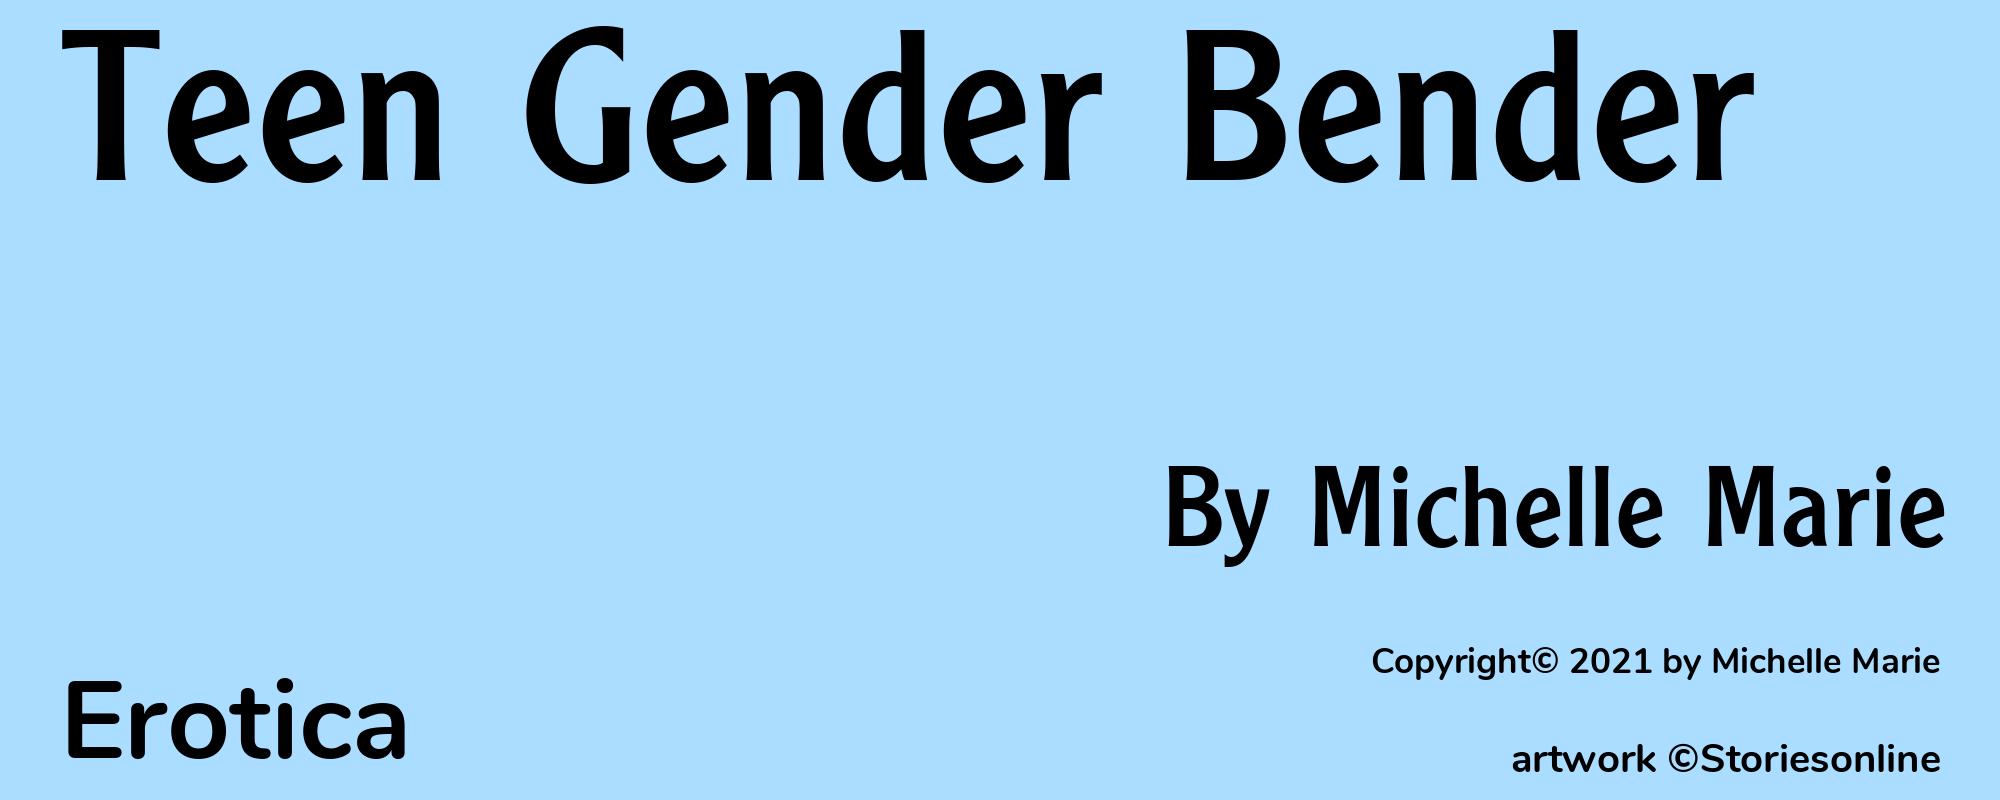 Teen Gender Bender - Cover